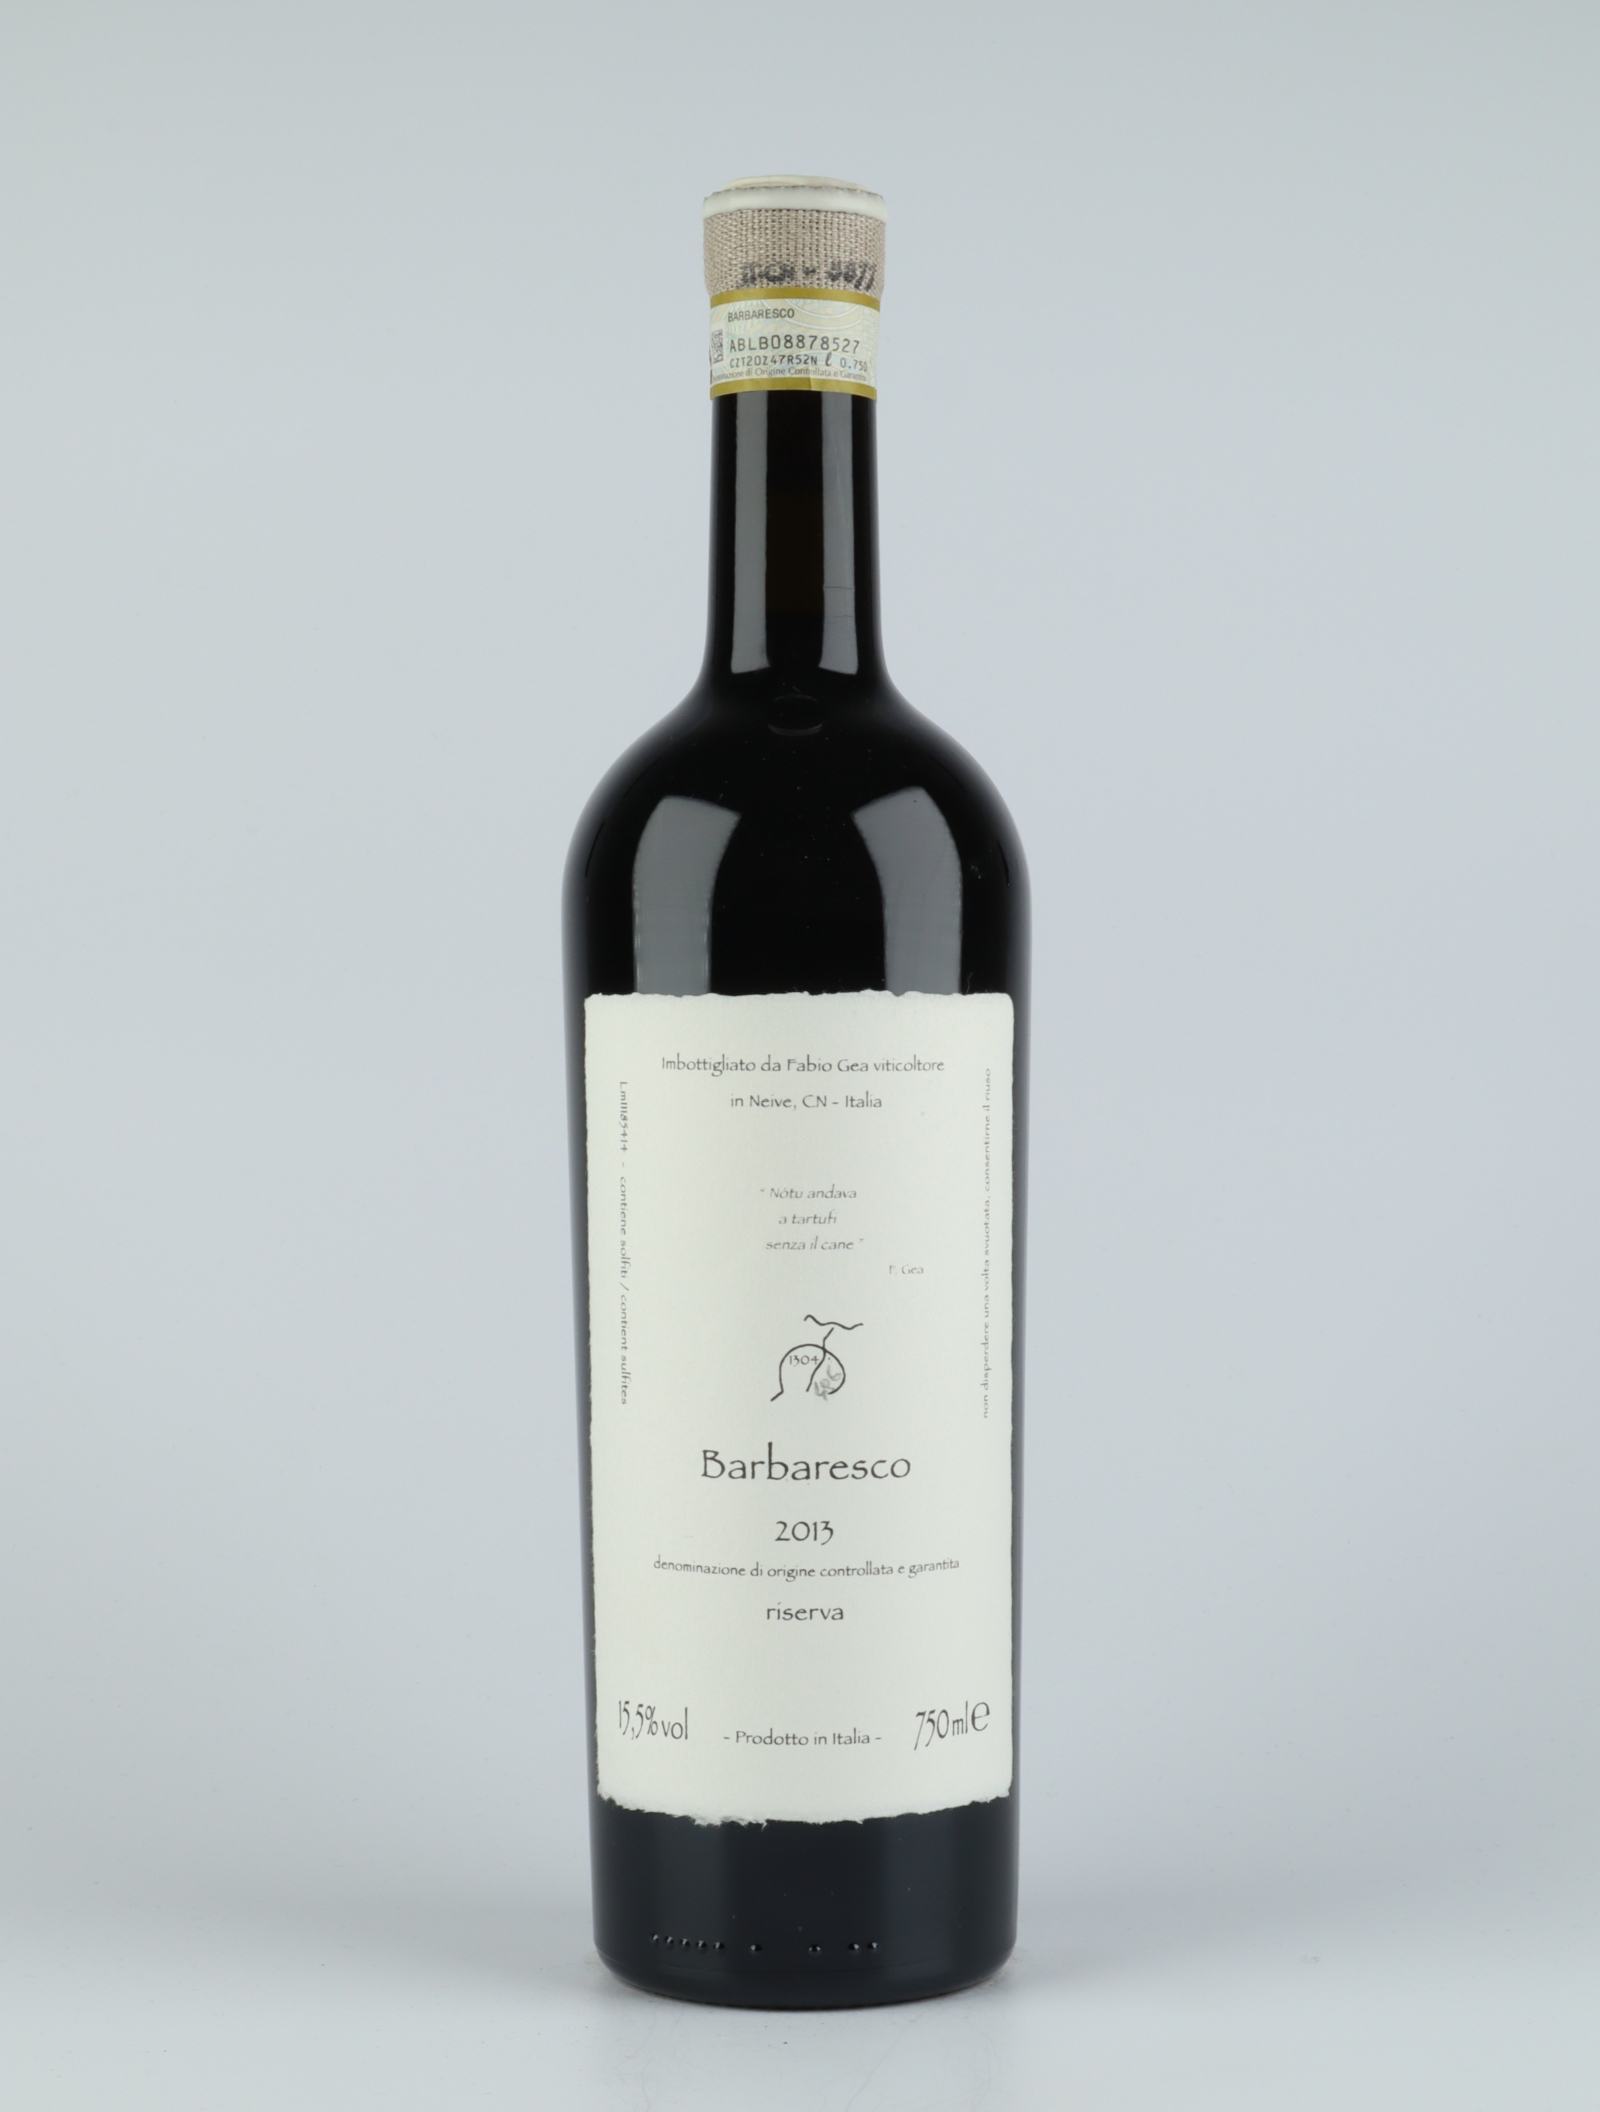 En flaske 2013 Barbaresco Riserva Rødvin fra Fabio Gea, Piemonte i Italien